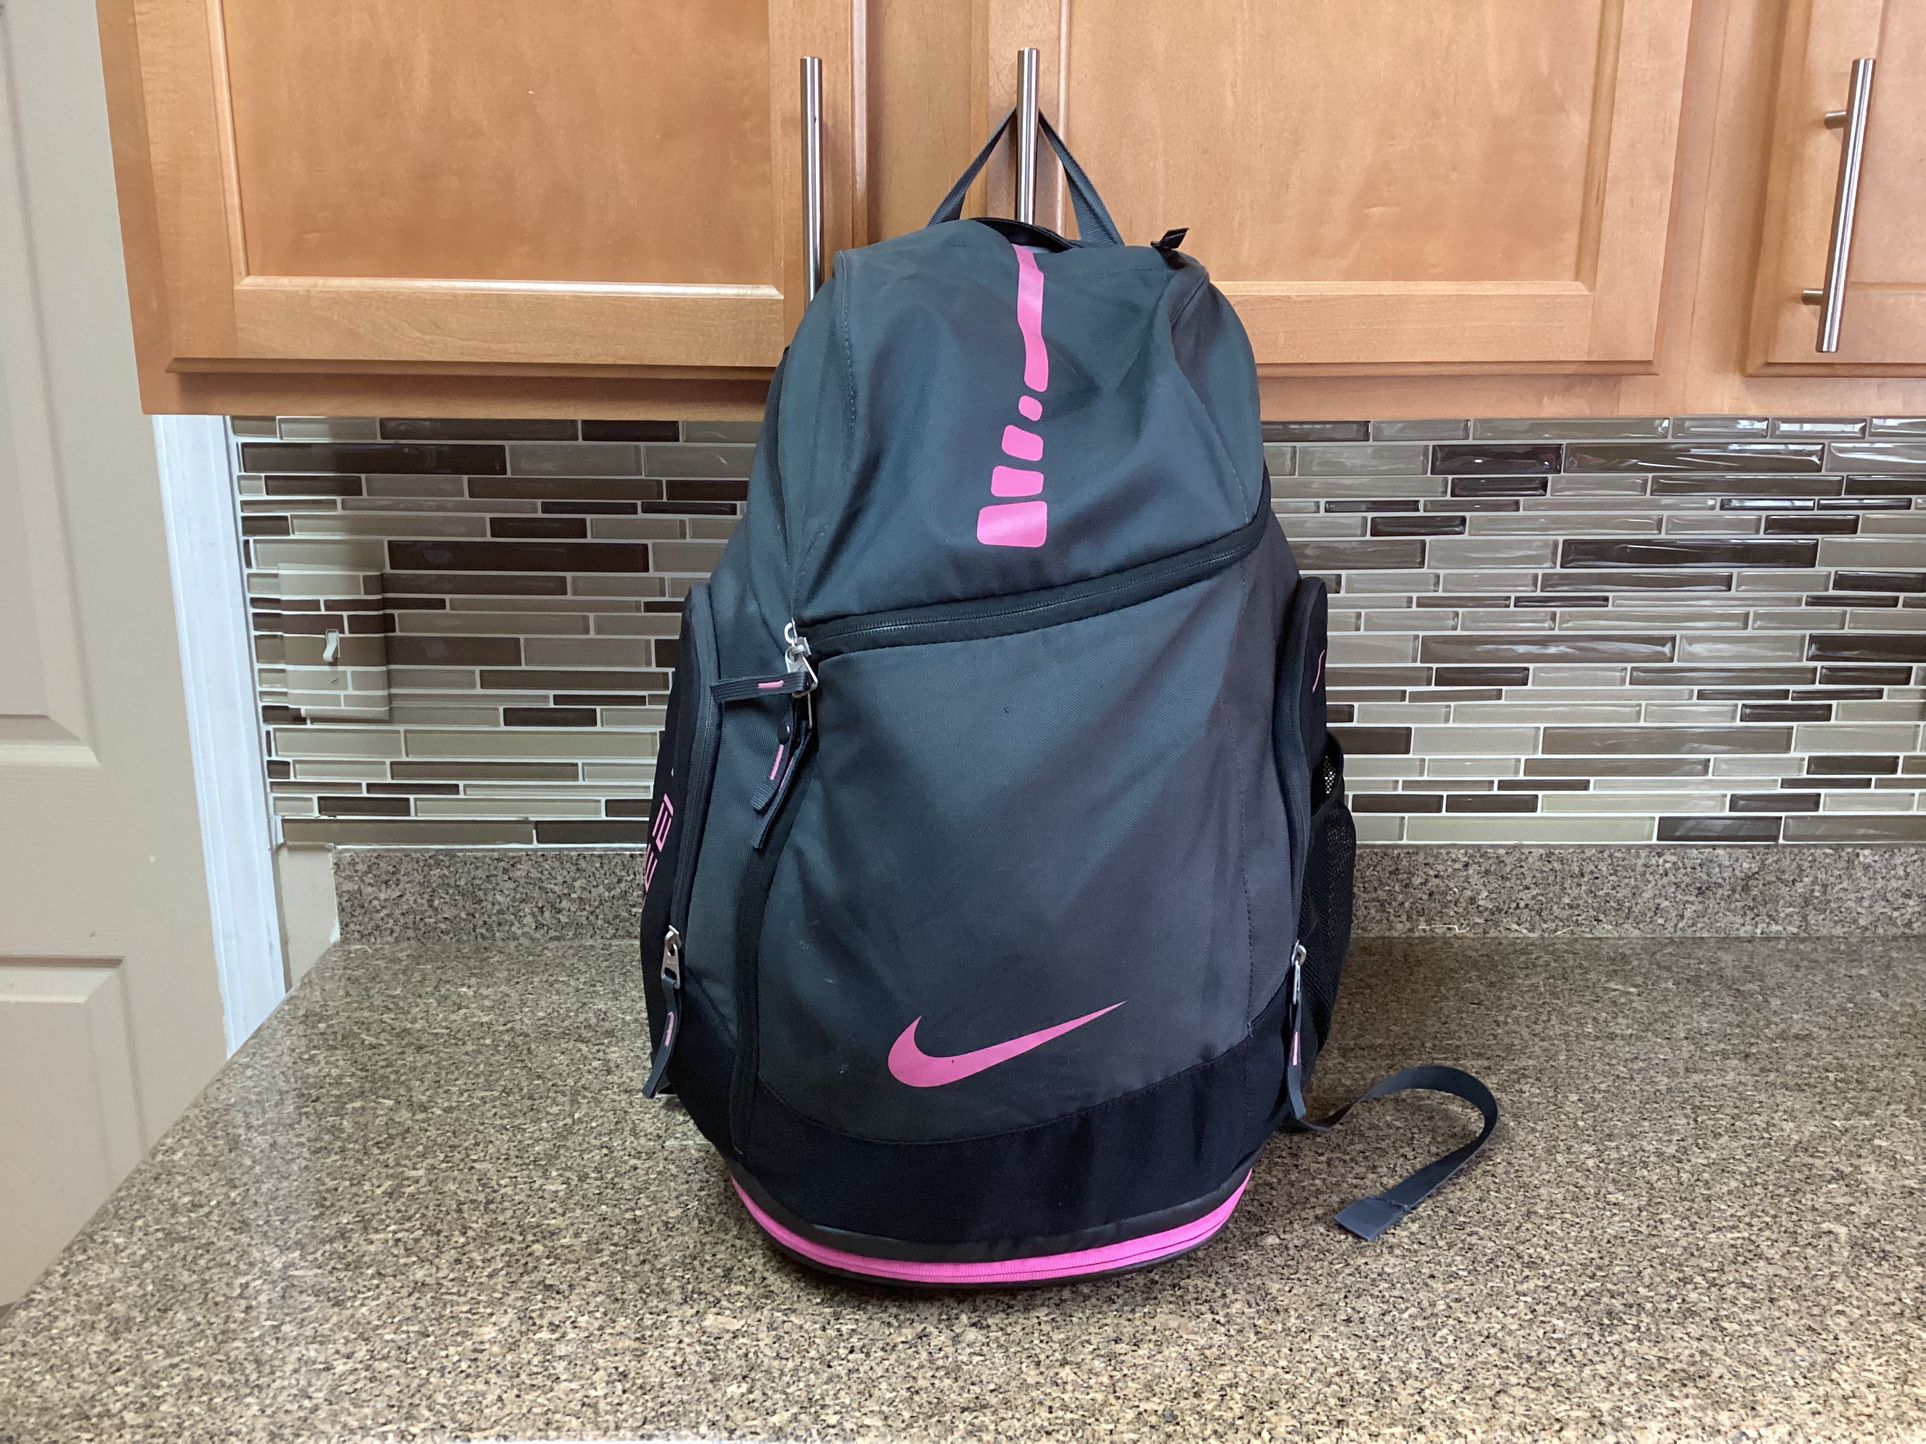 Familielid Armoedig Overtuiging Nike Elite Max Air Backpack for Sale in Northfield, NJ - OfferUp